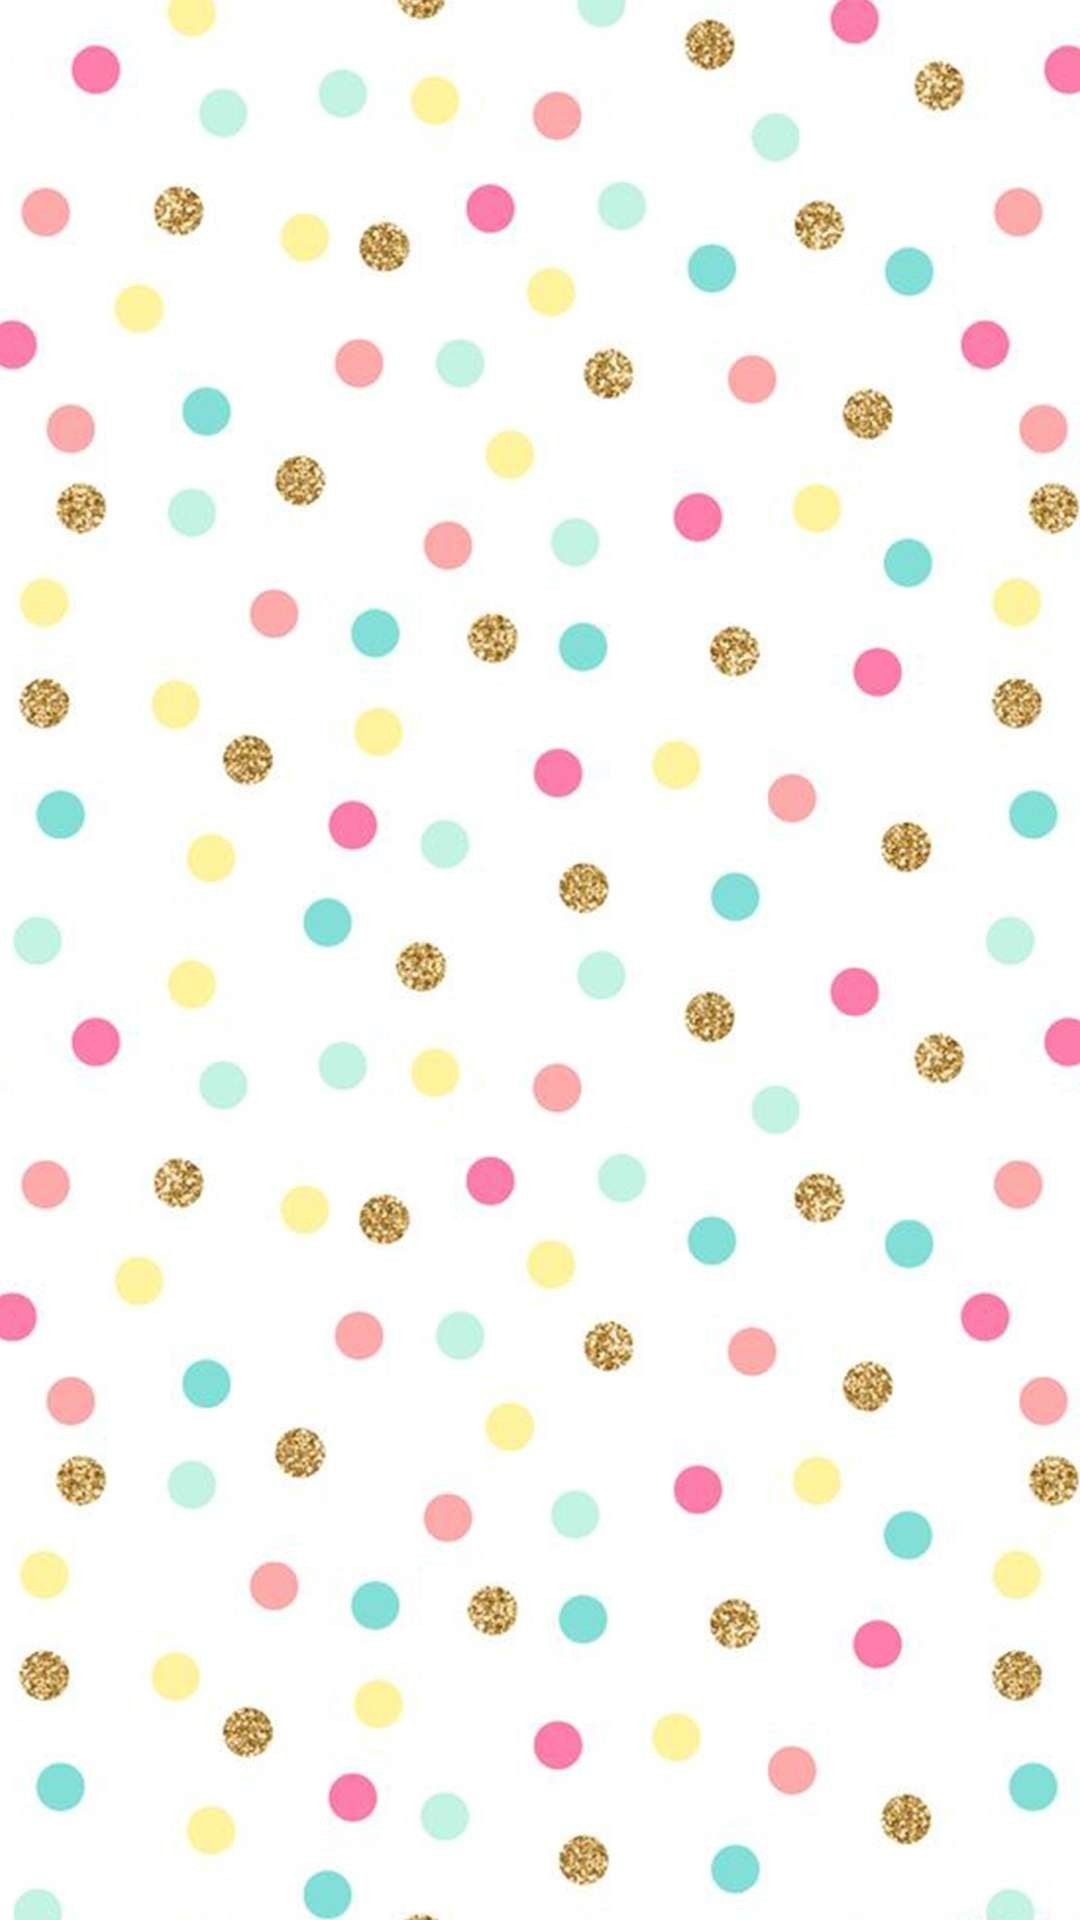 1080x1920 Wallpaper Backgrounds, Confetti Wallpaper, Pink Polka Dots Wallpaper,  Wallpaper Iphone Gold, Mint